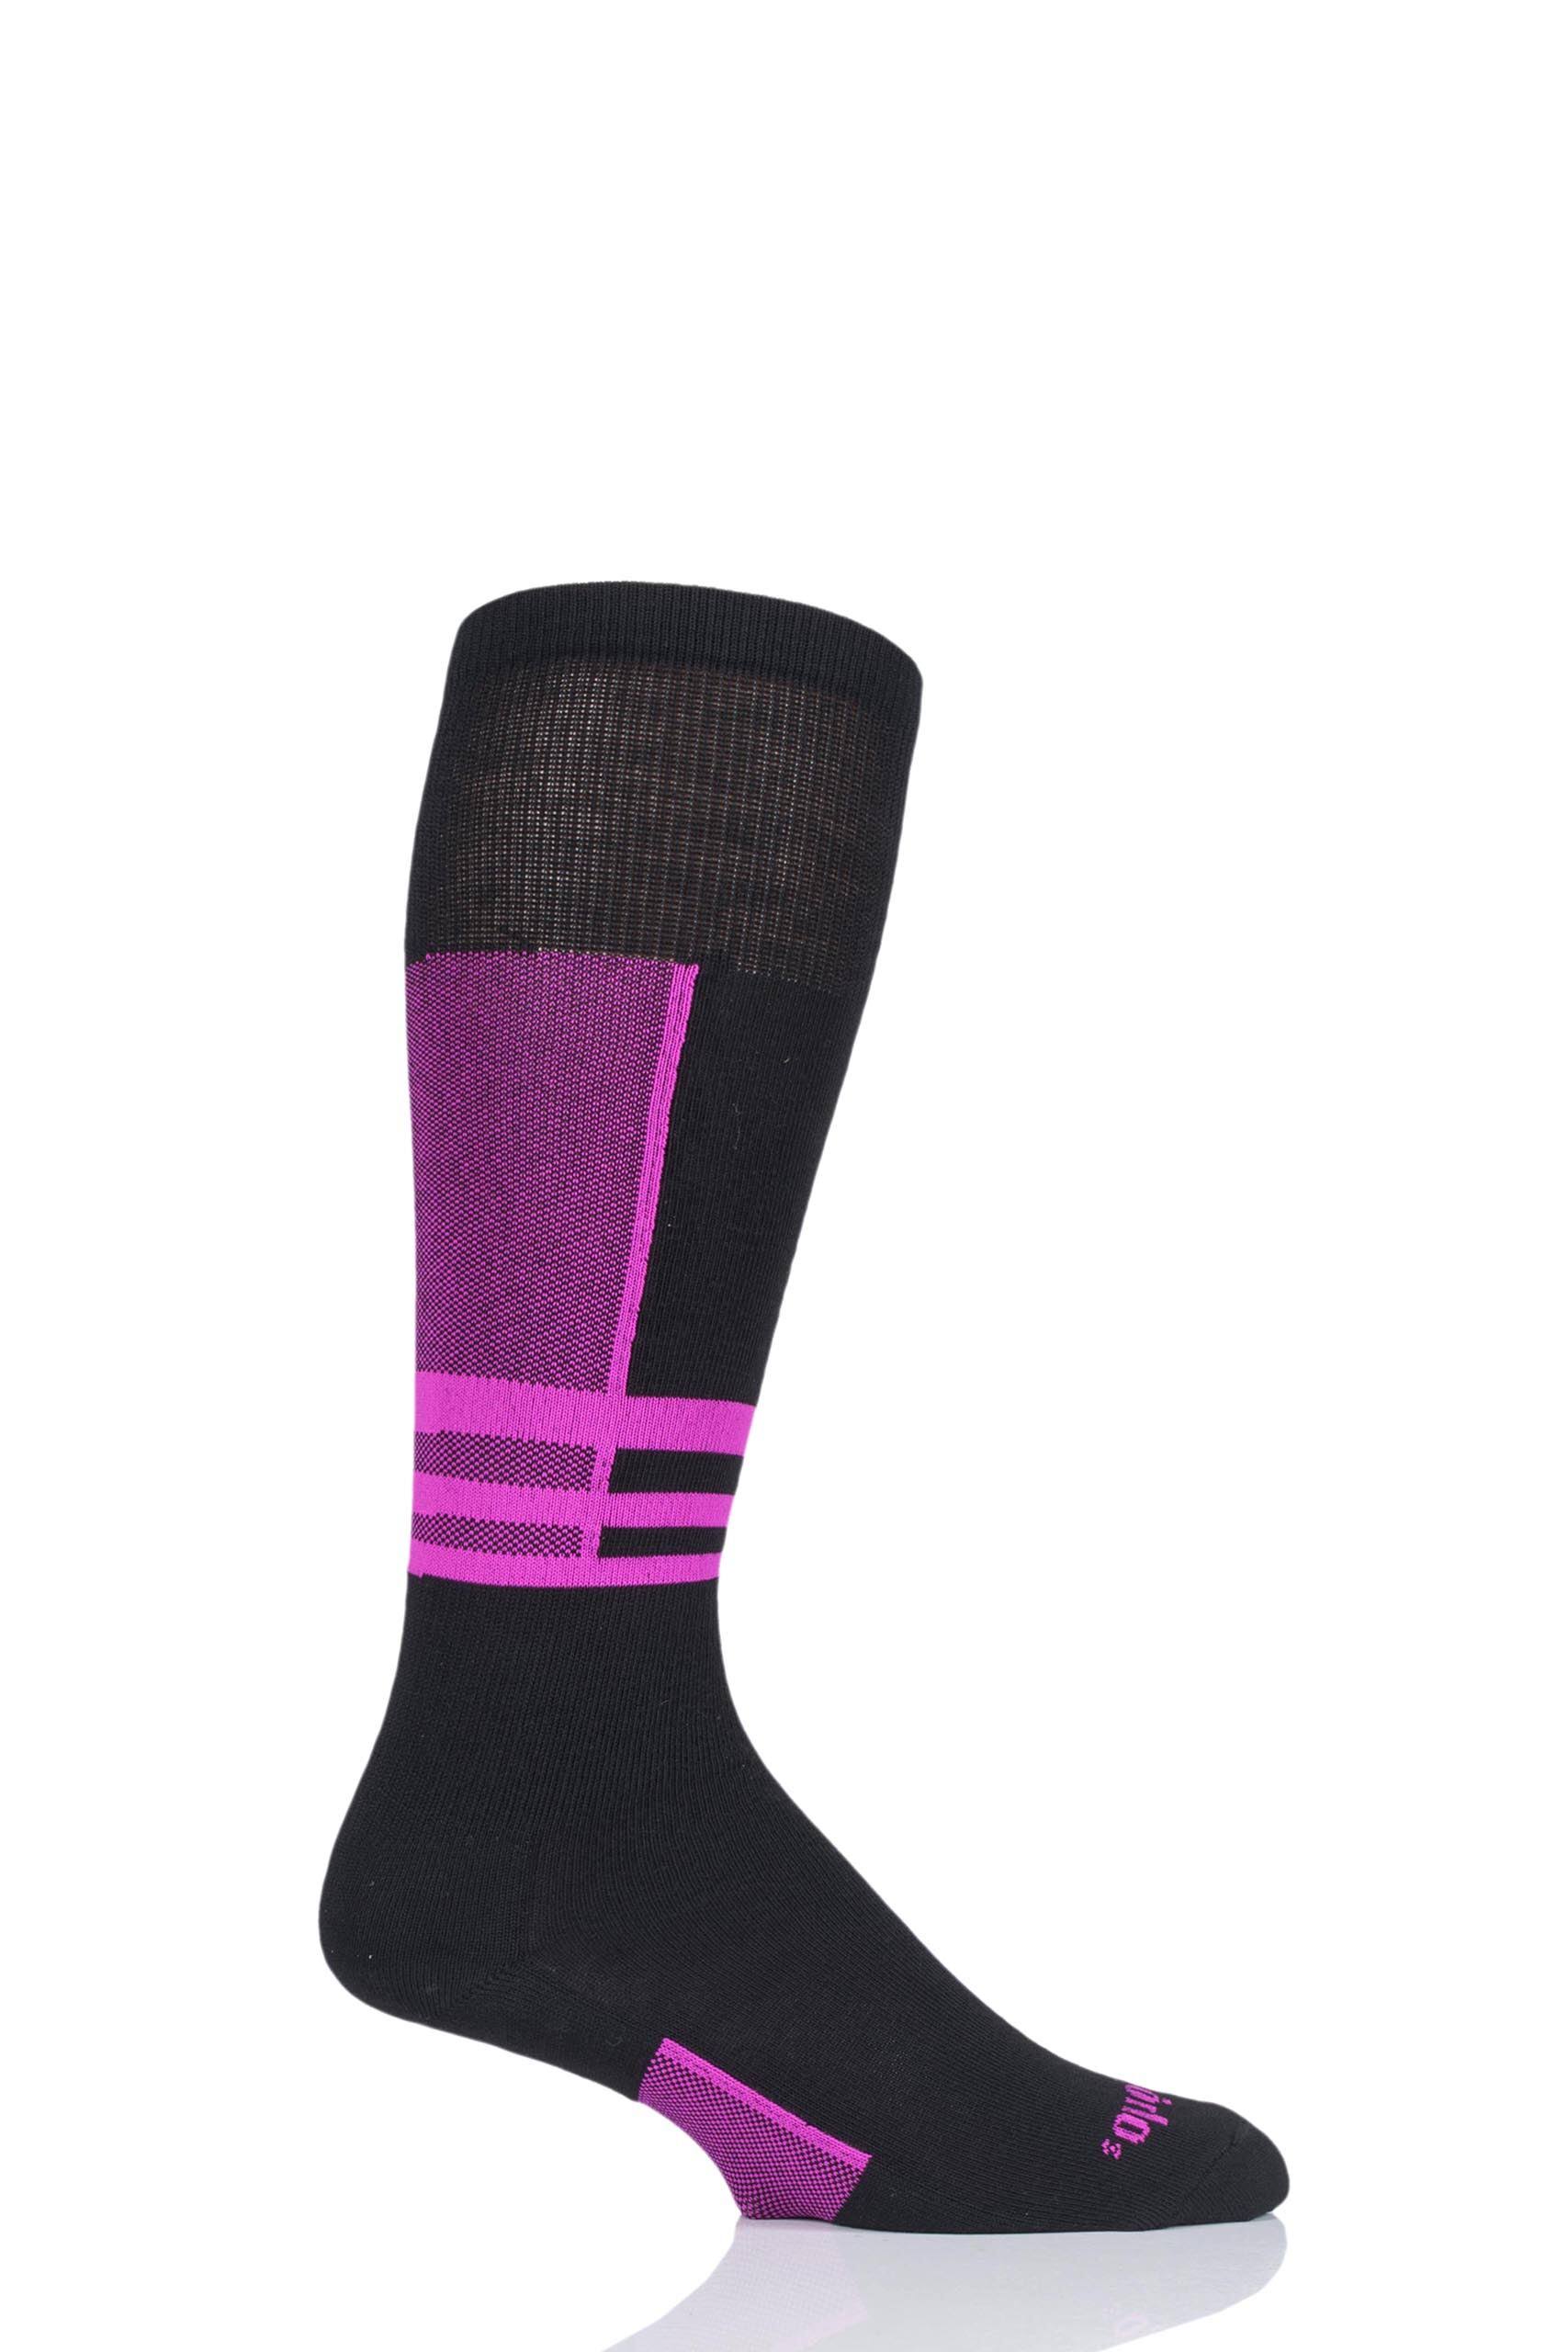 Thorlos Ultra Thin Custom Ski Sock - Black/Red